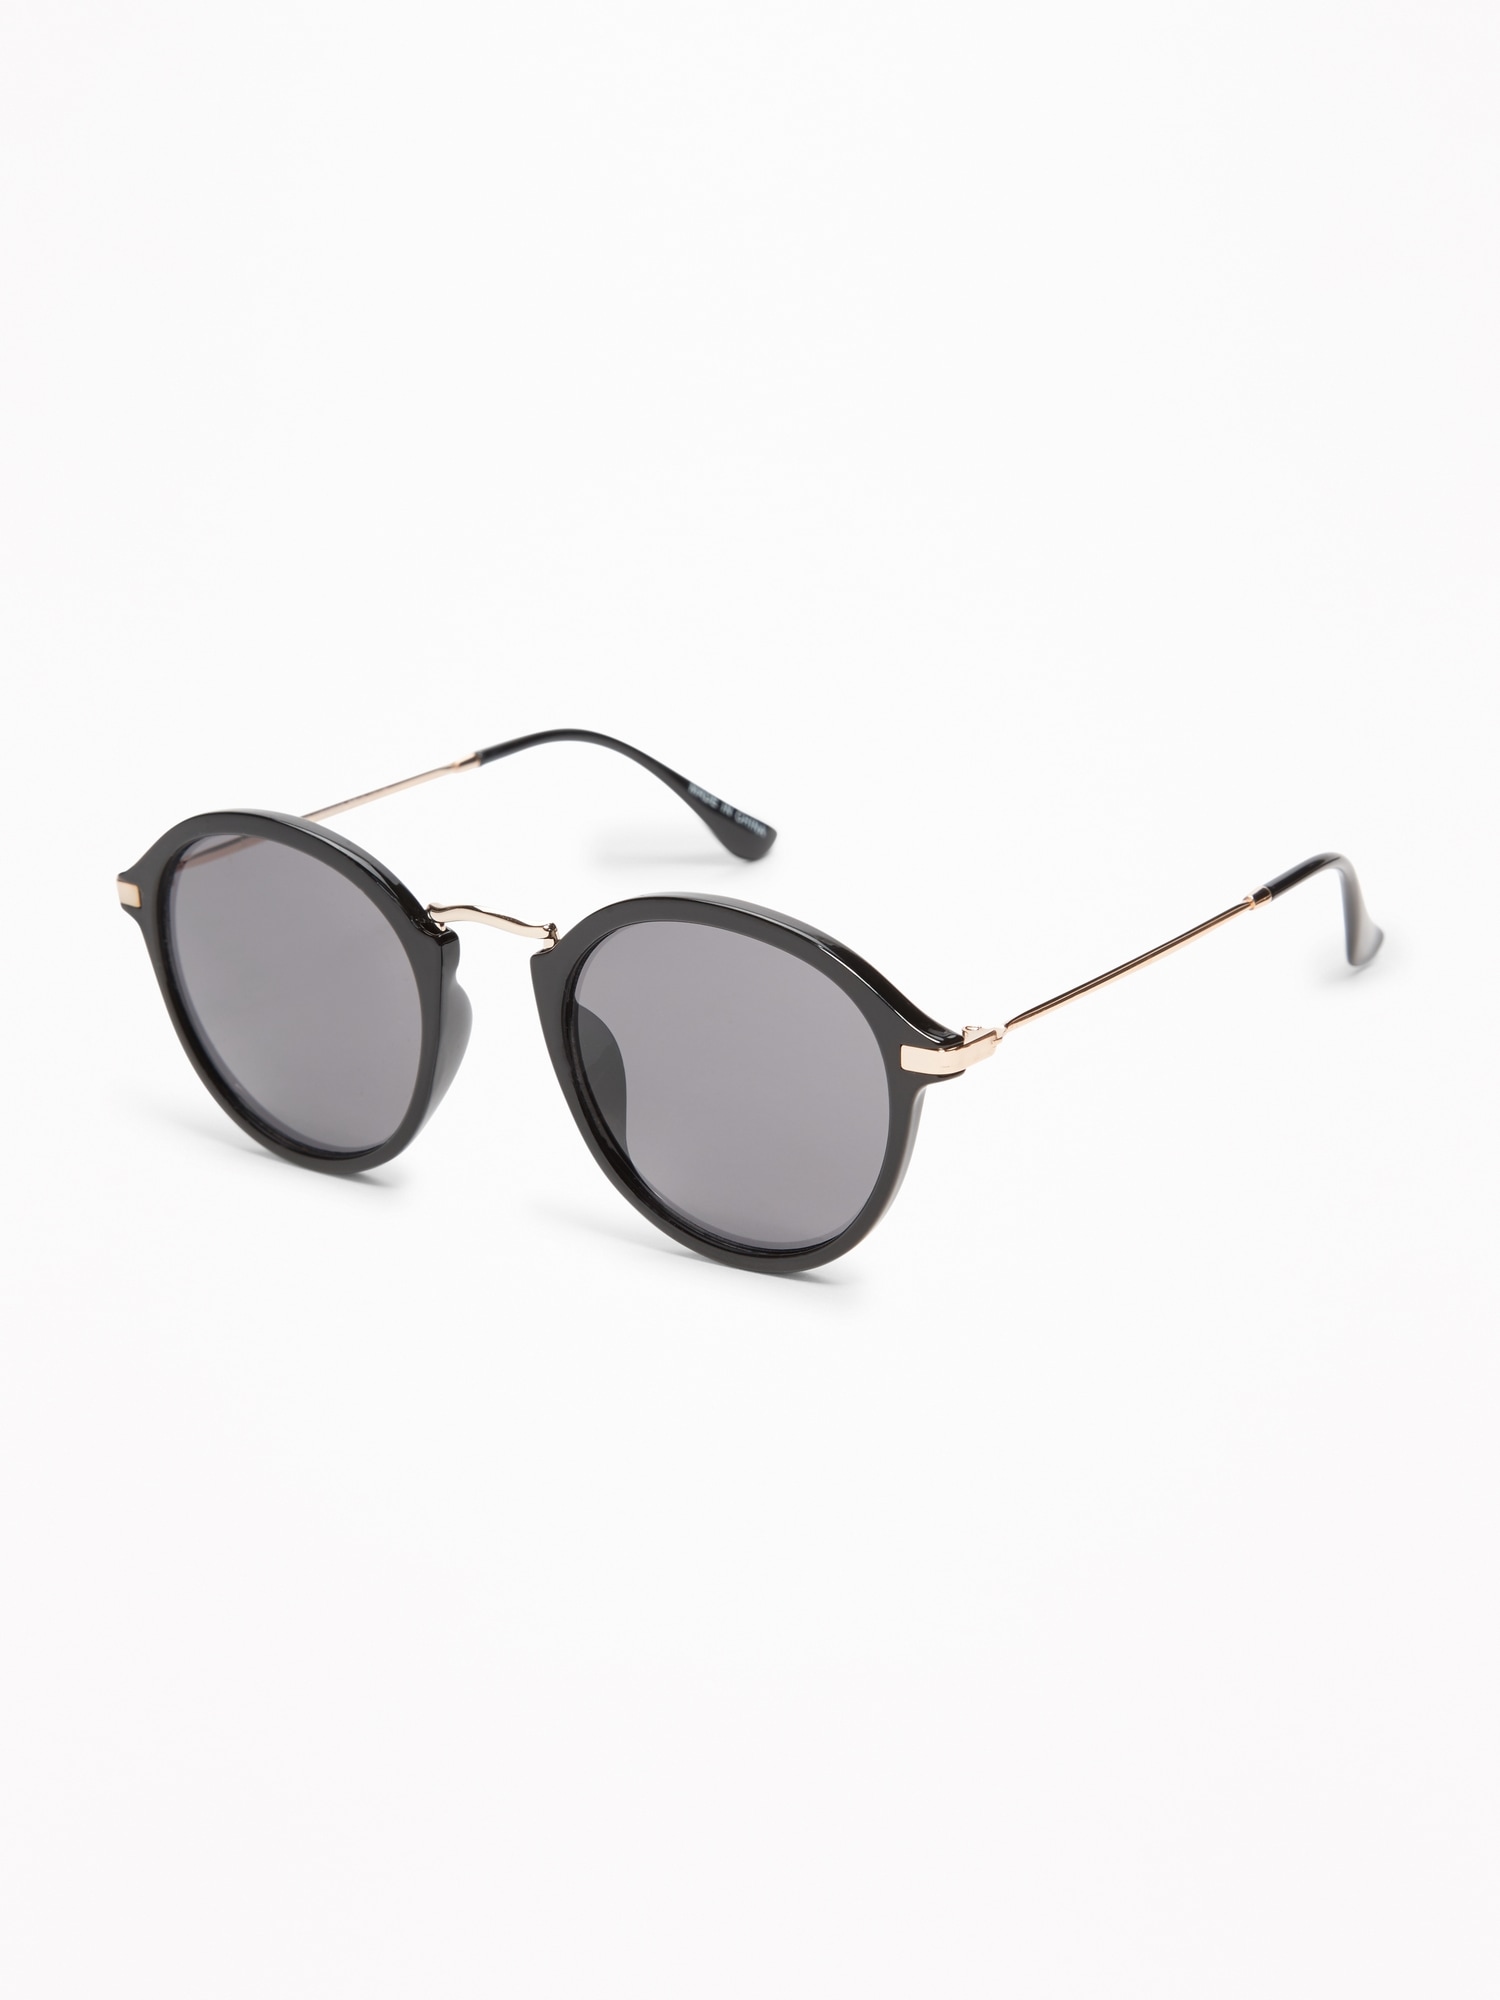 Old Navy Orange Round-Frame Sunglasses for Women - 7494180020000